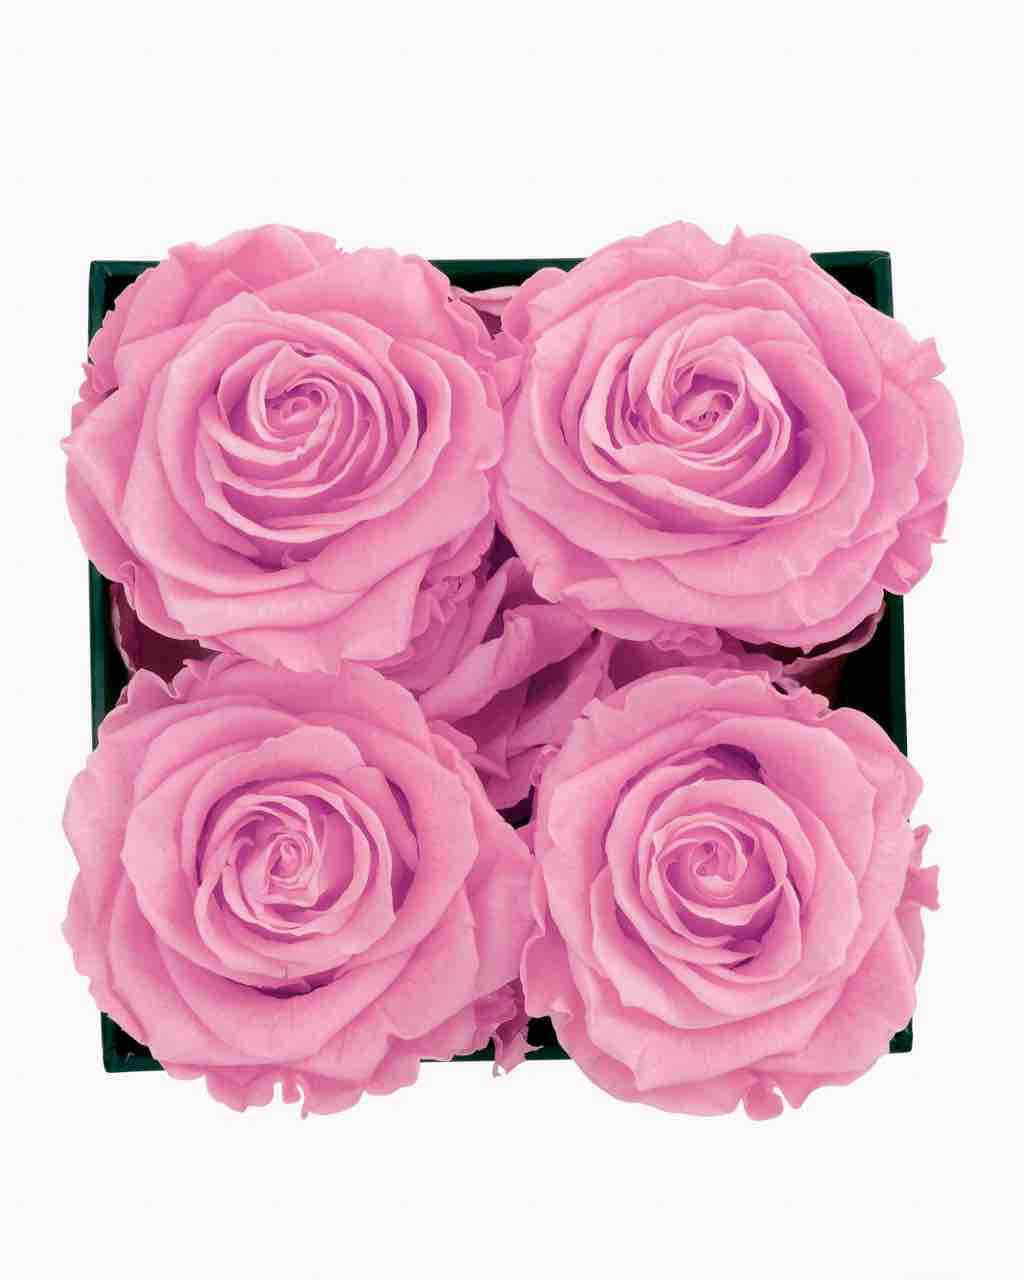 Rose Box - Small Luxury Box